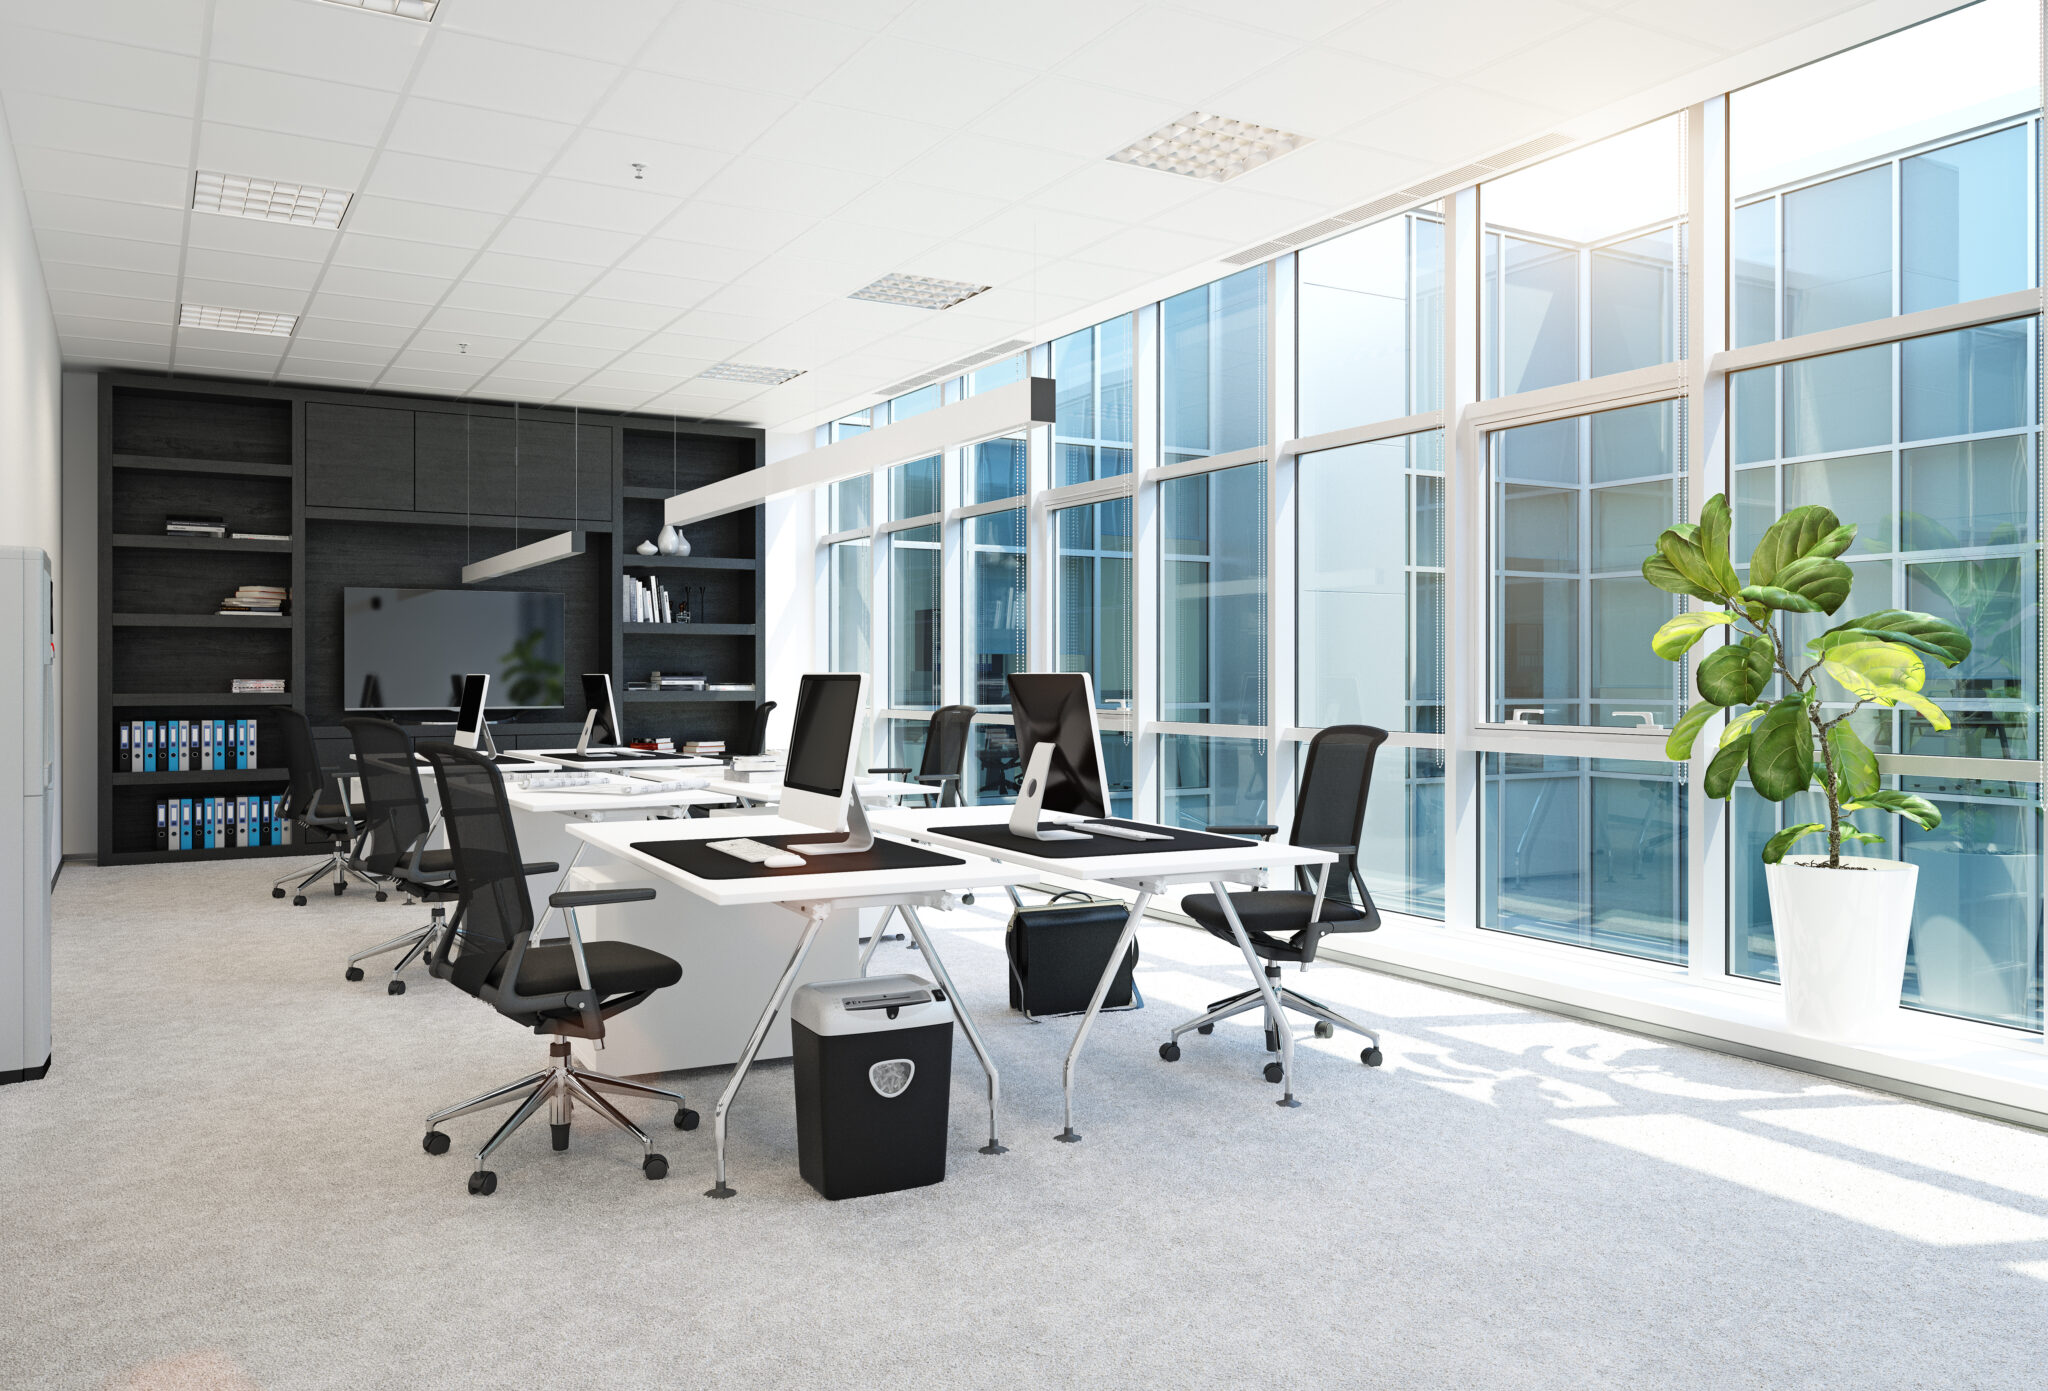 modern office interior. 3D rendering concept